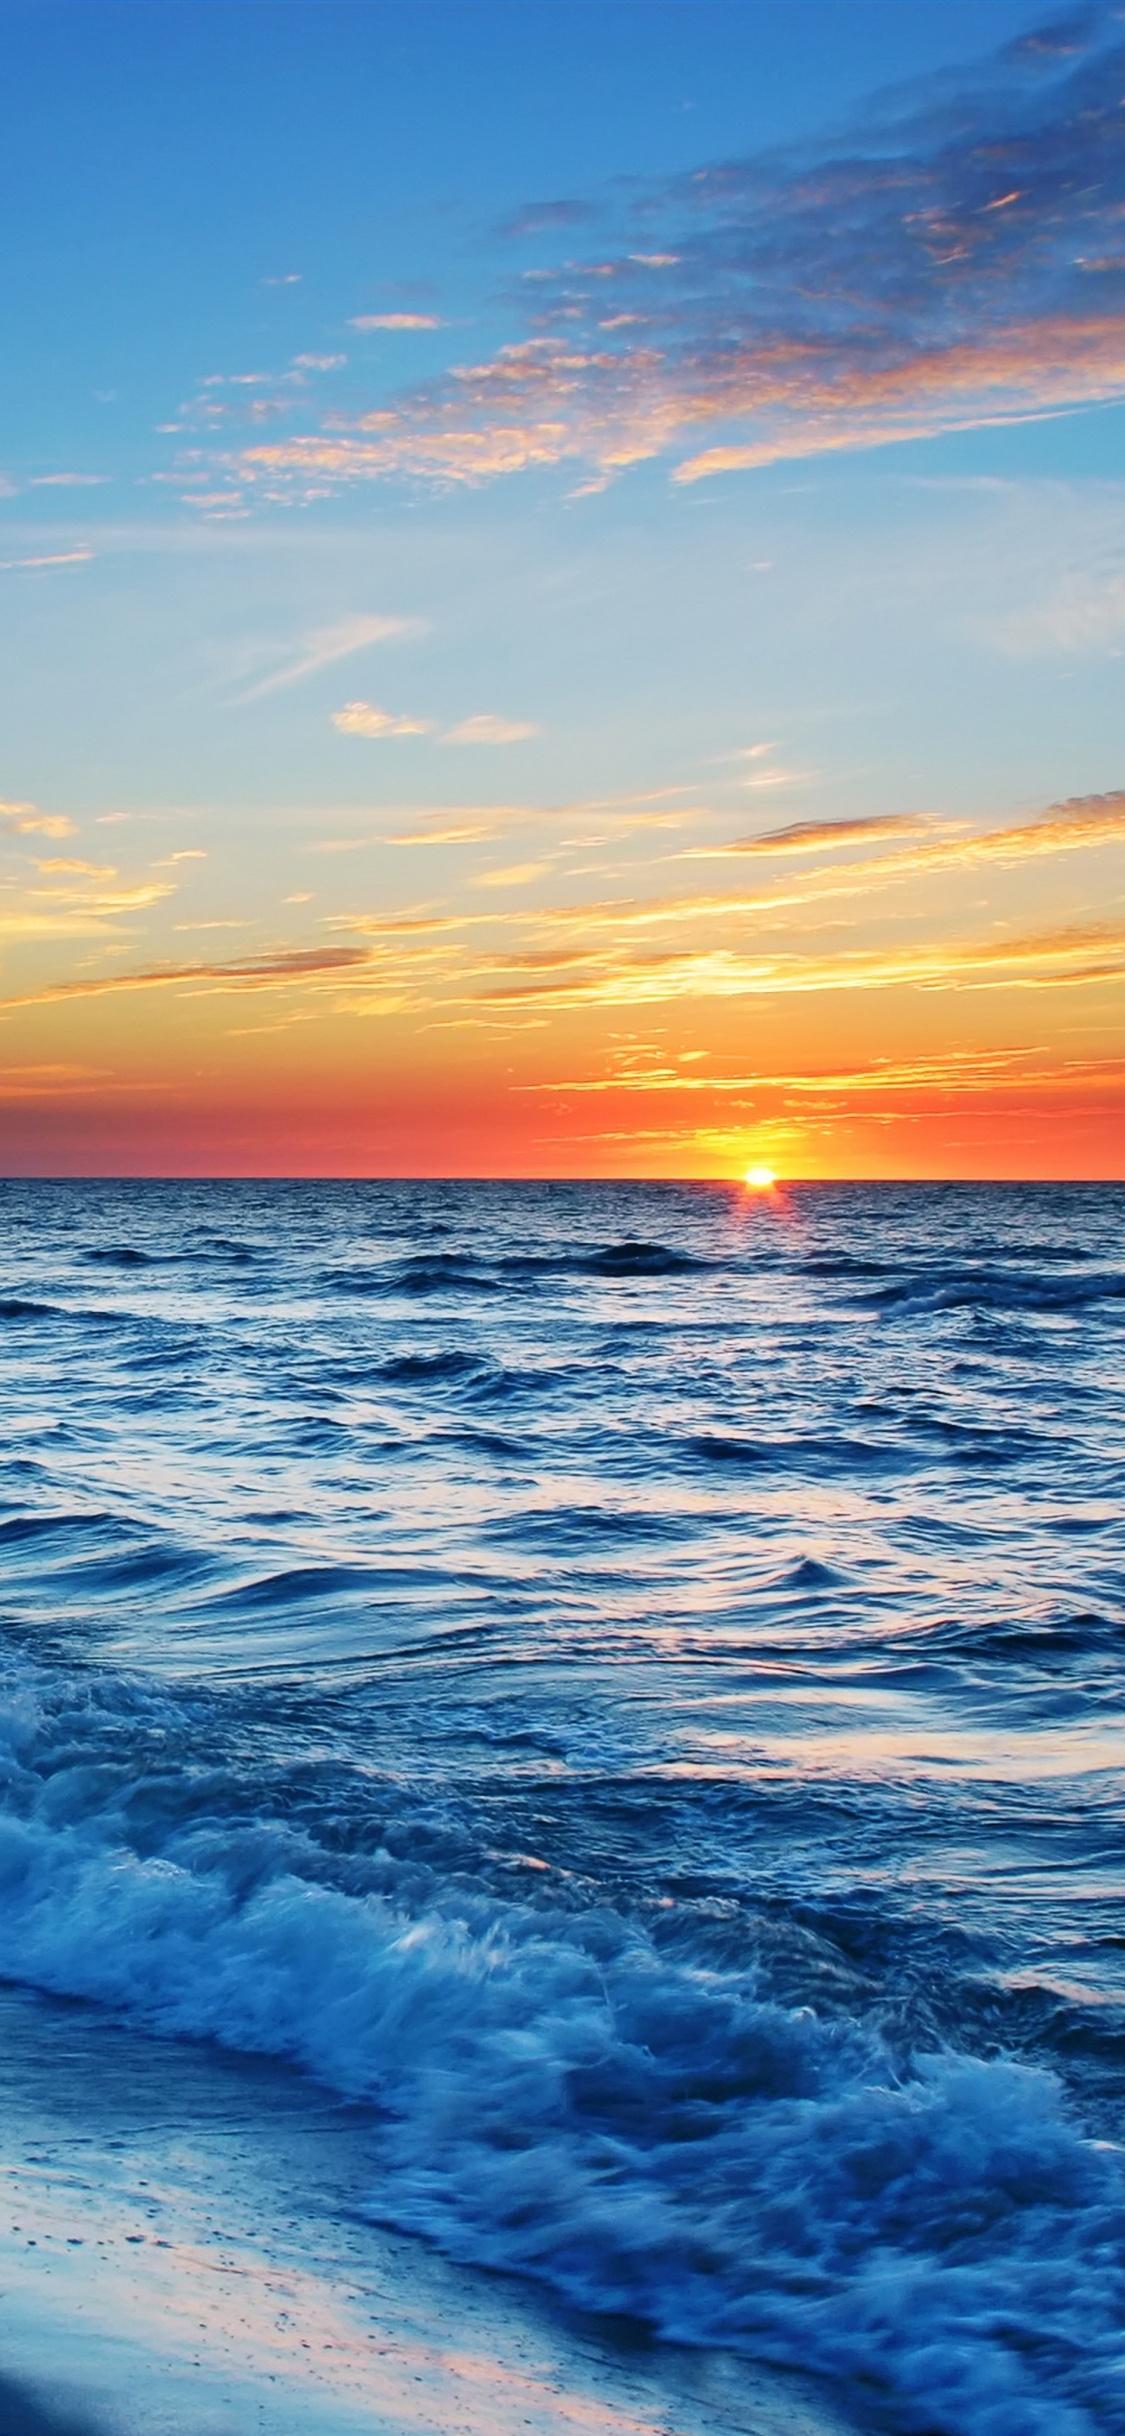 Ocean Waves Crashing on Shore During Sunset. Wallpaper in 1125x2436 Resolution